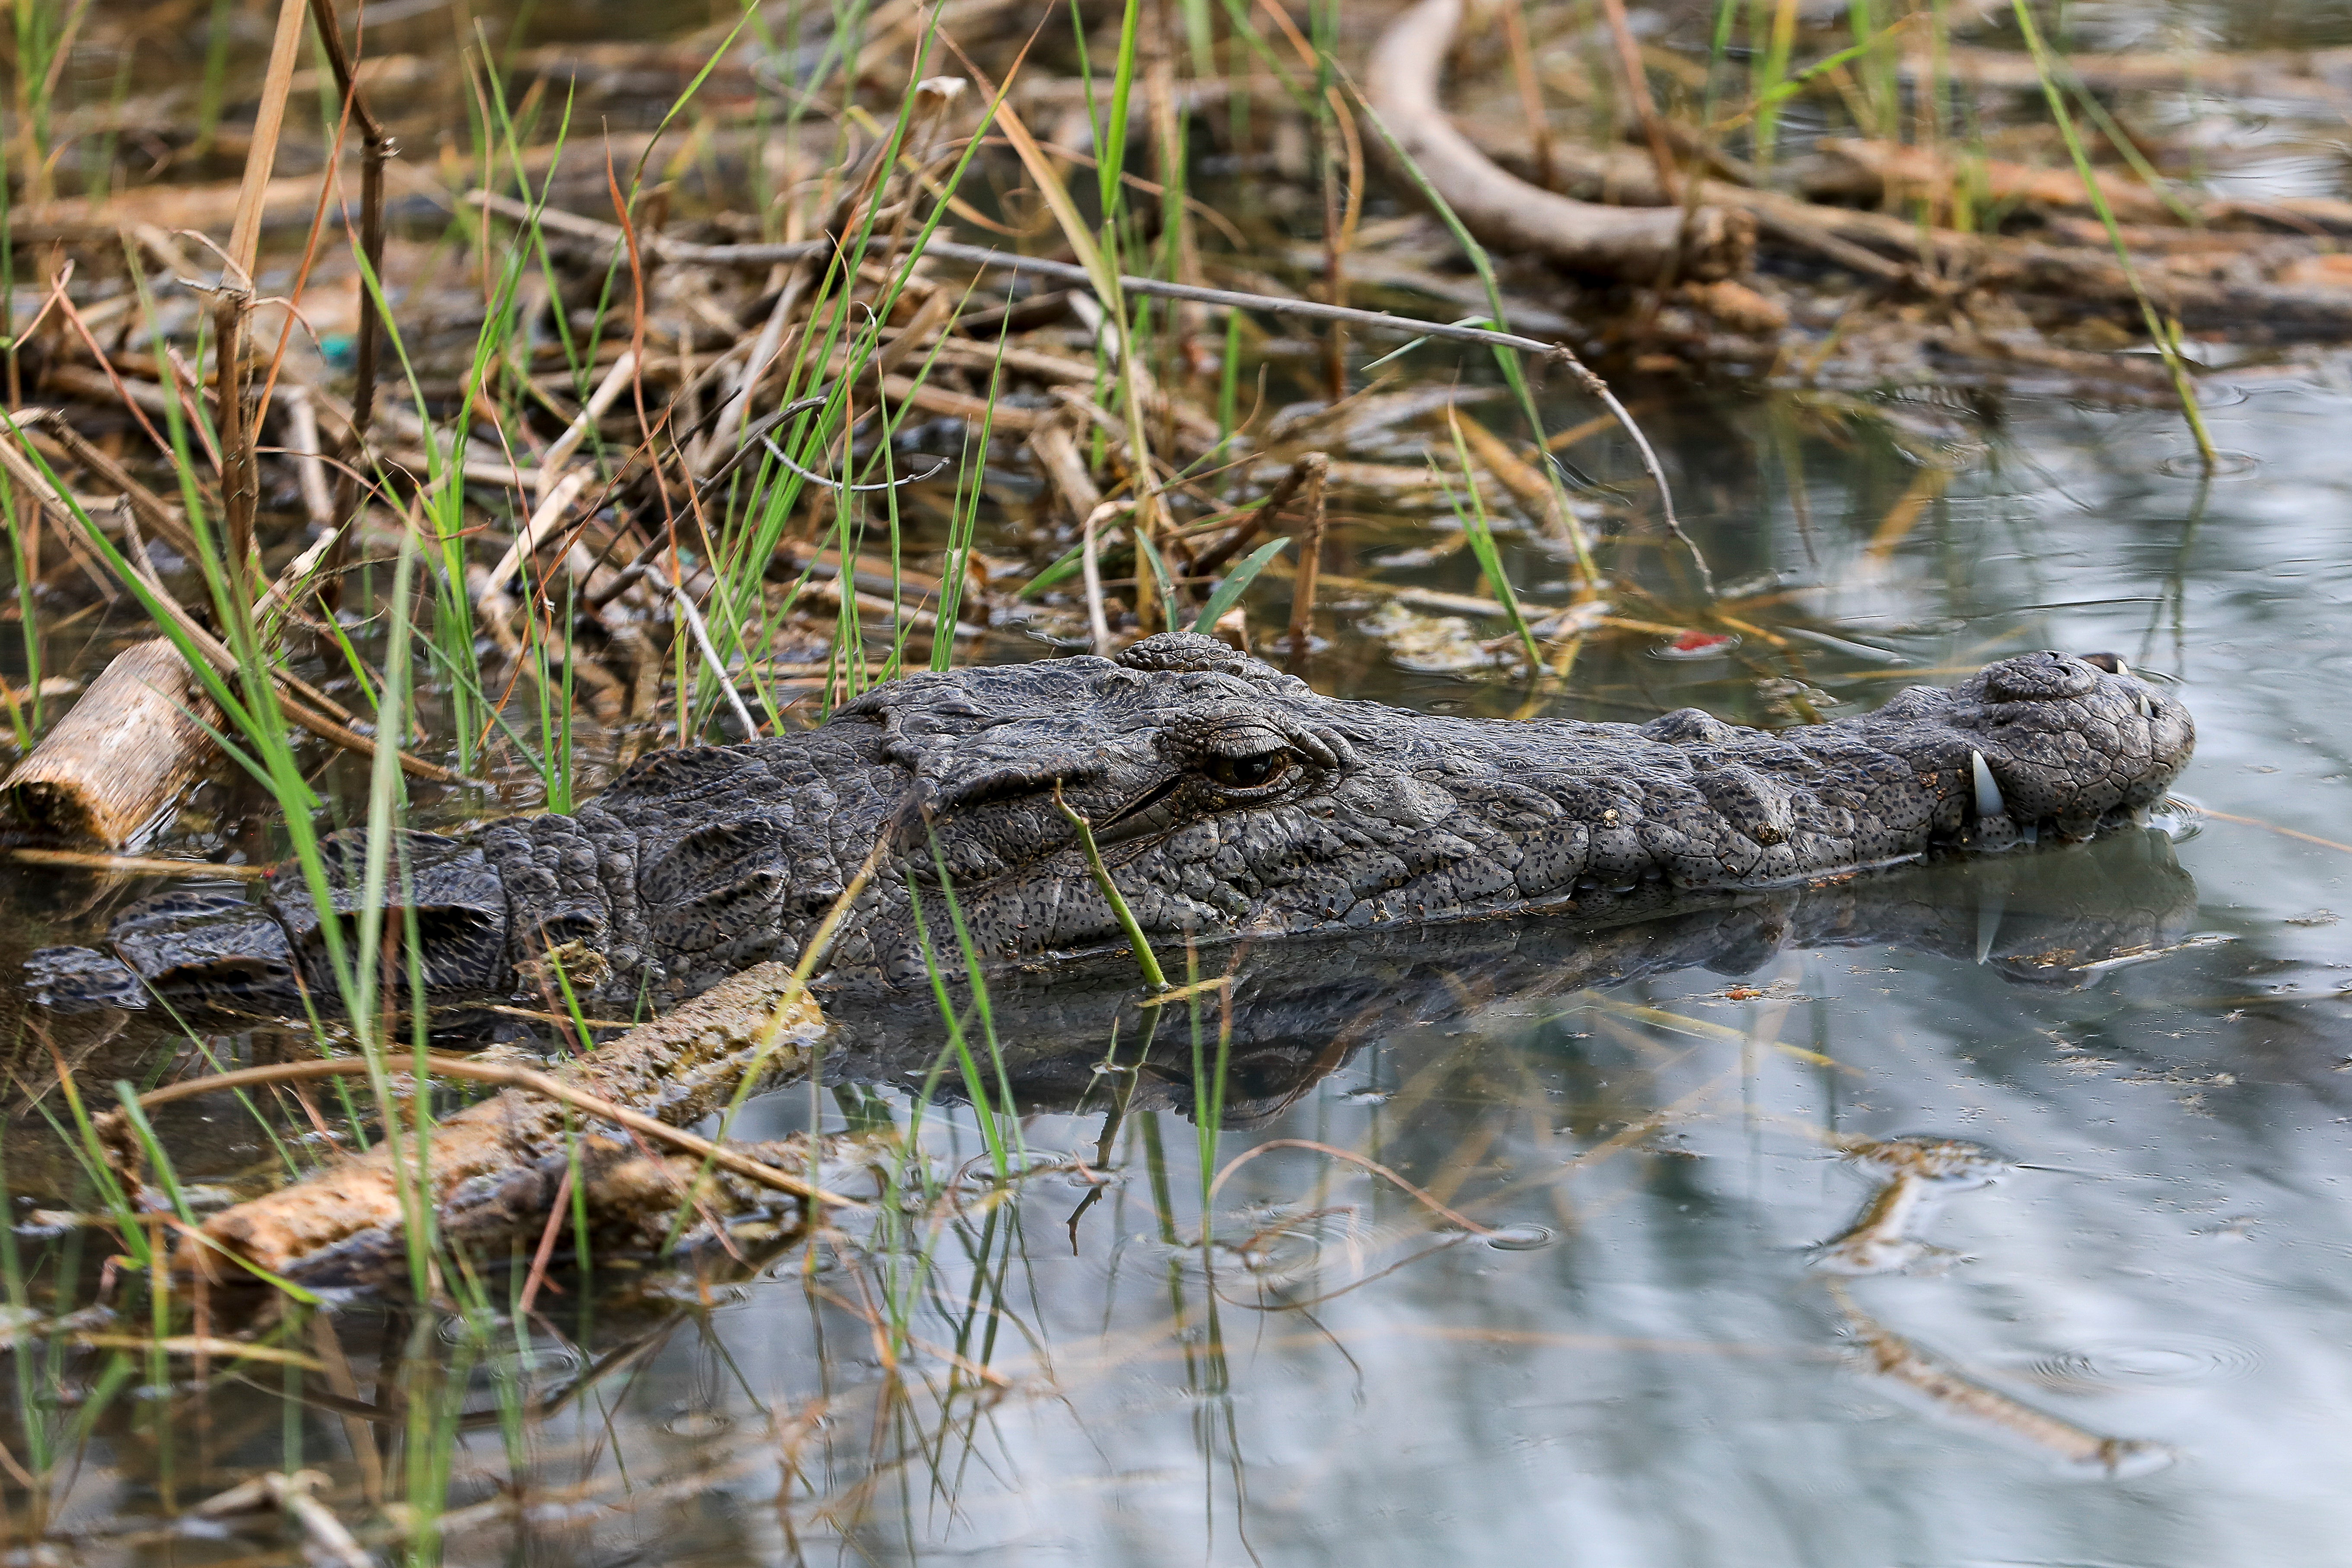 Representational image of a crocodile swimming